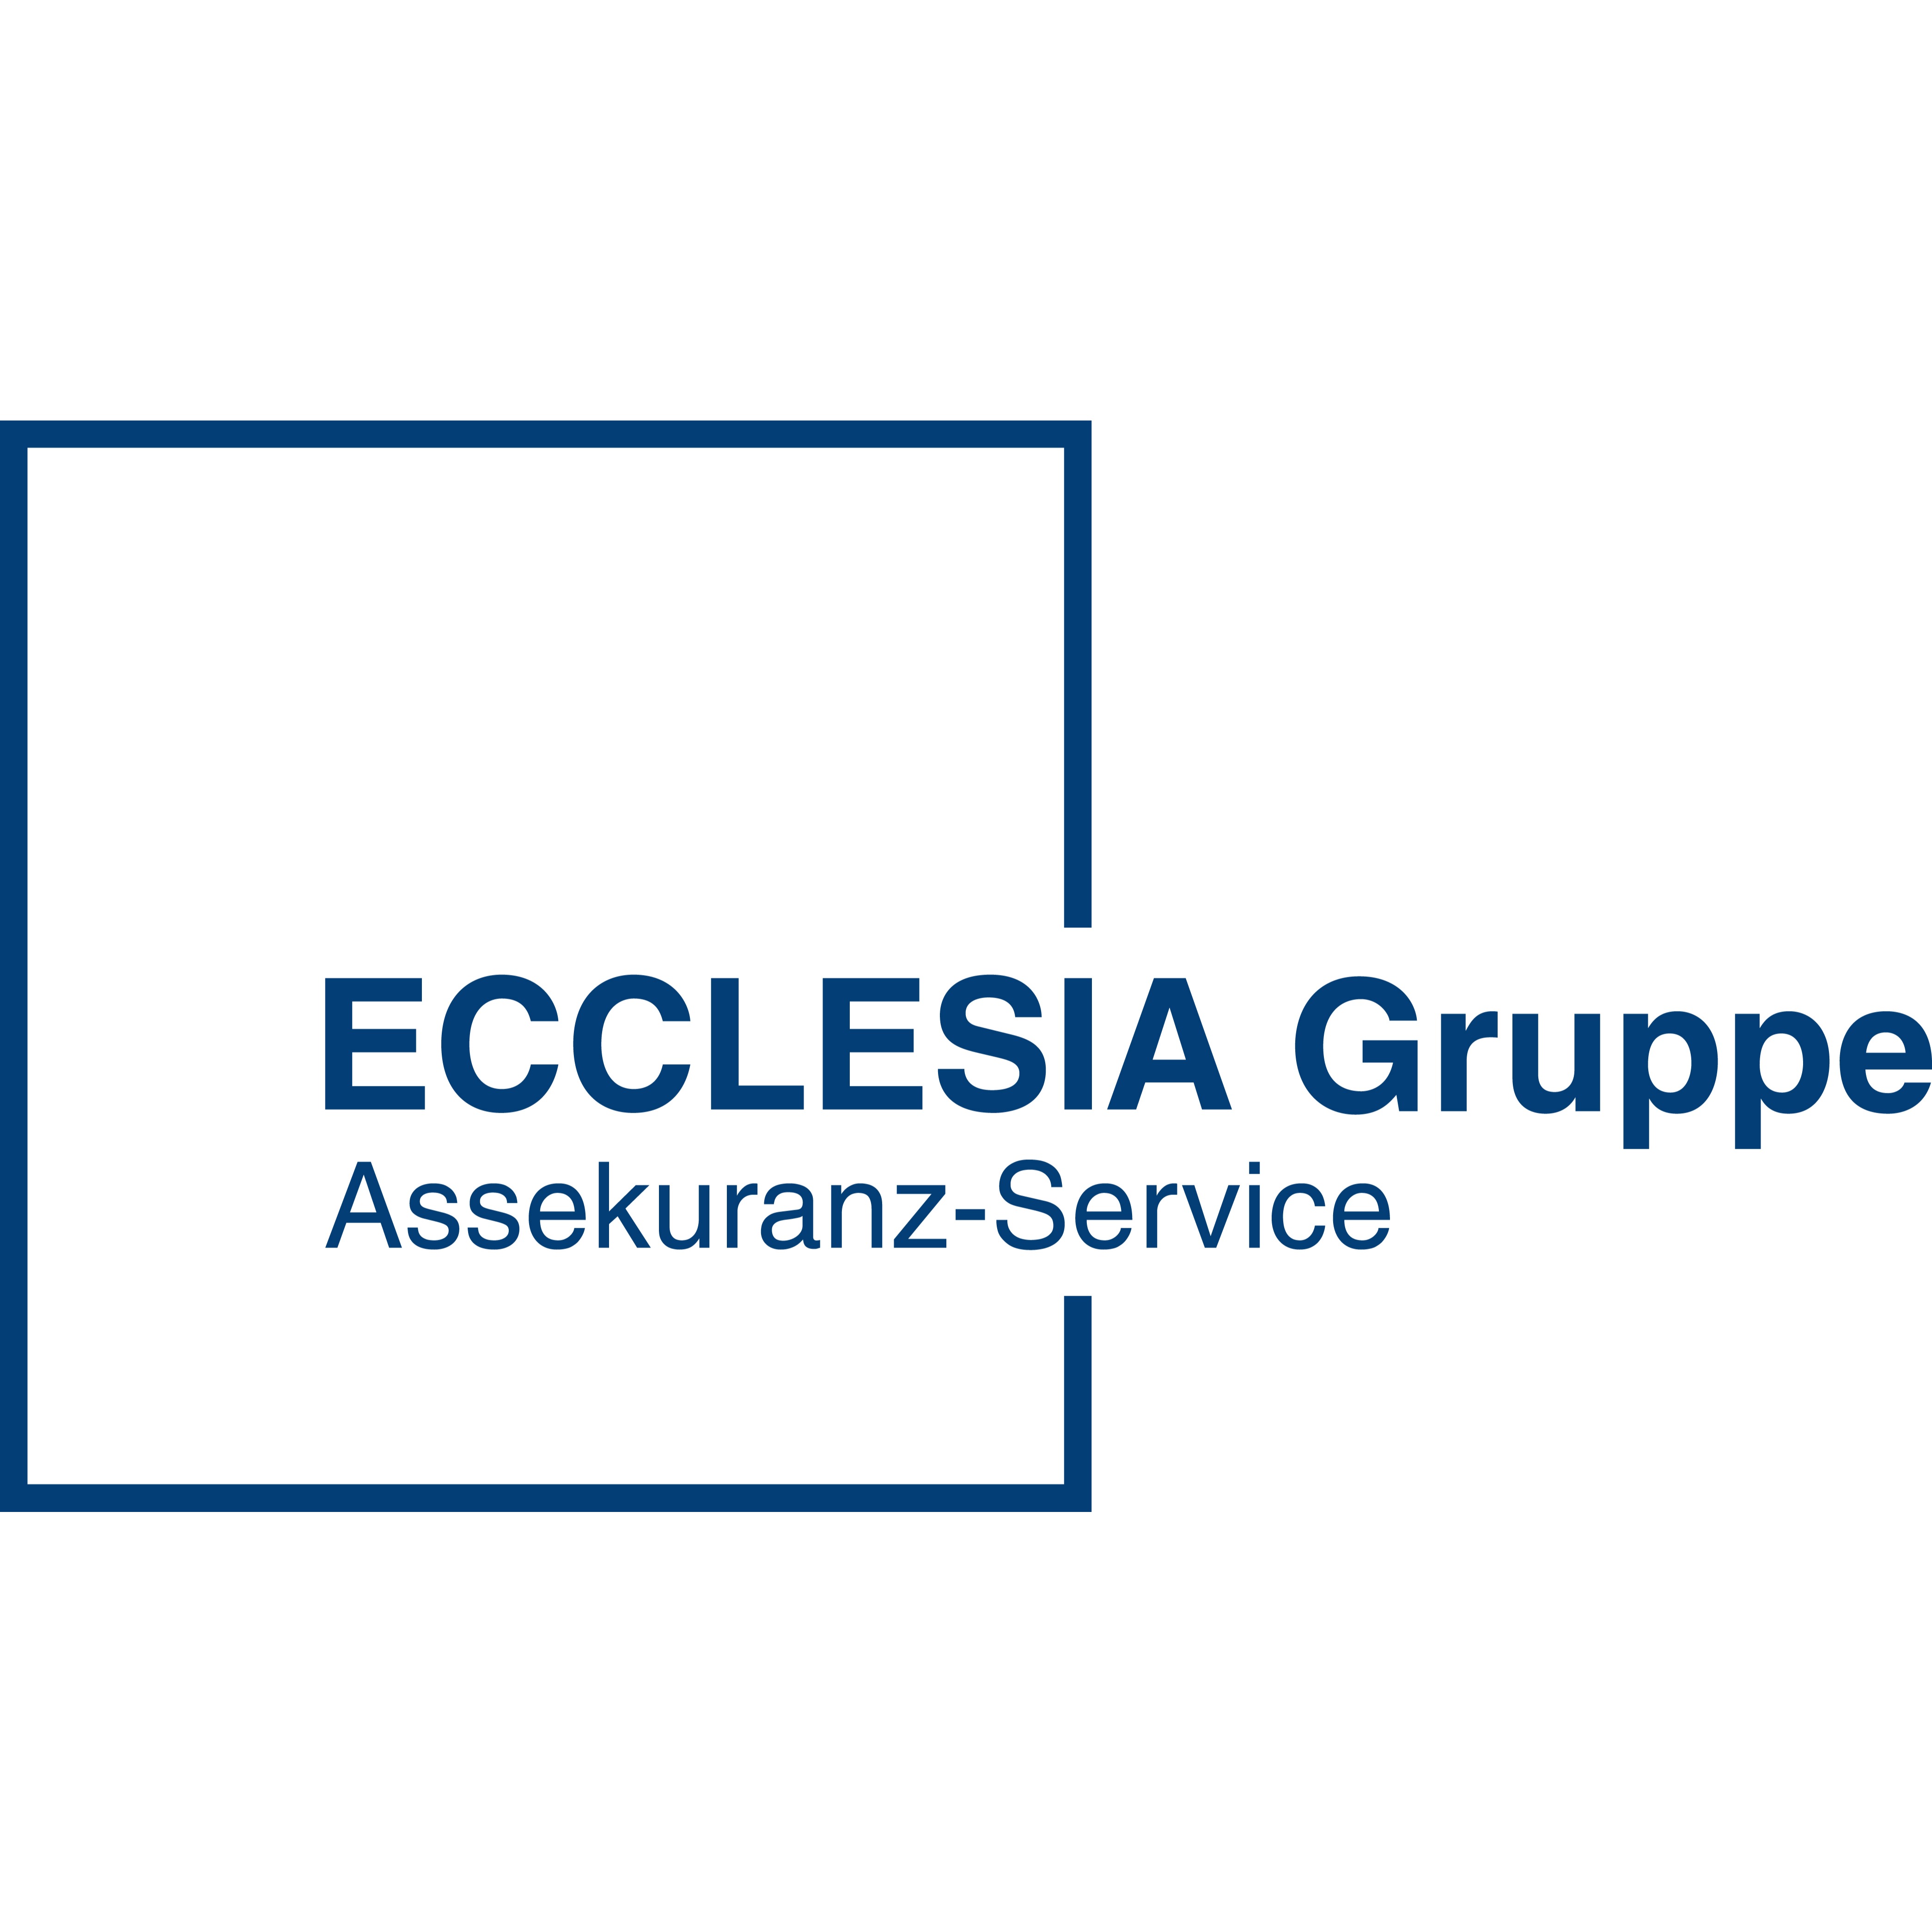 Ecclesia Gruppe Assekuranz-Service GmbH in Detmold - Logo